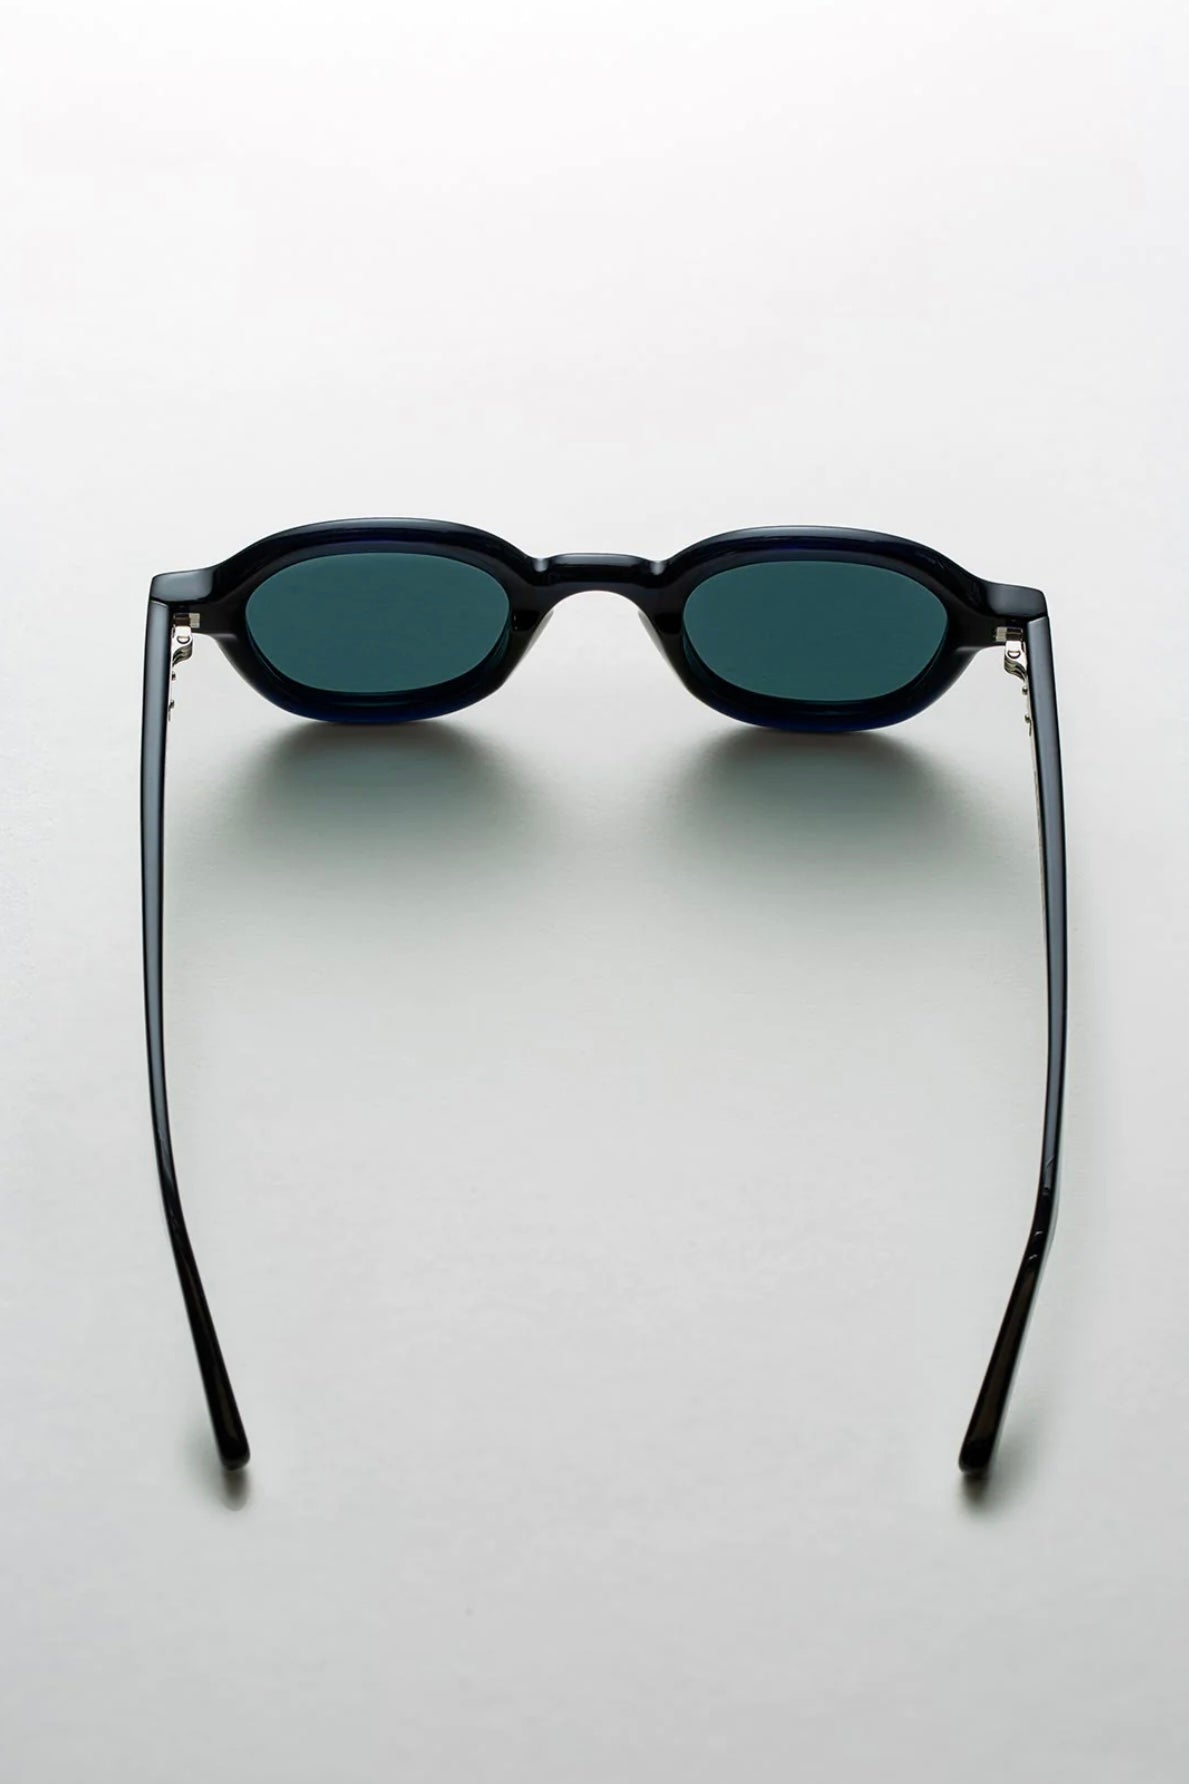 Oscar Magnuson - Sunglasses Joy OM5 Deep Ink